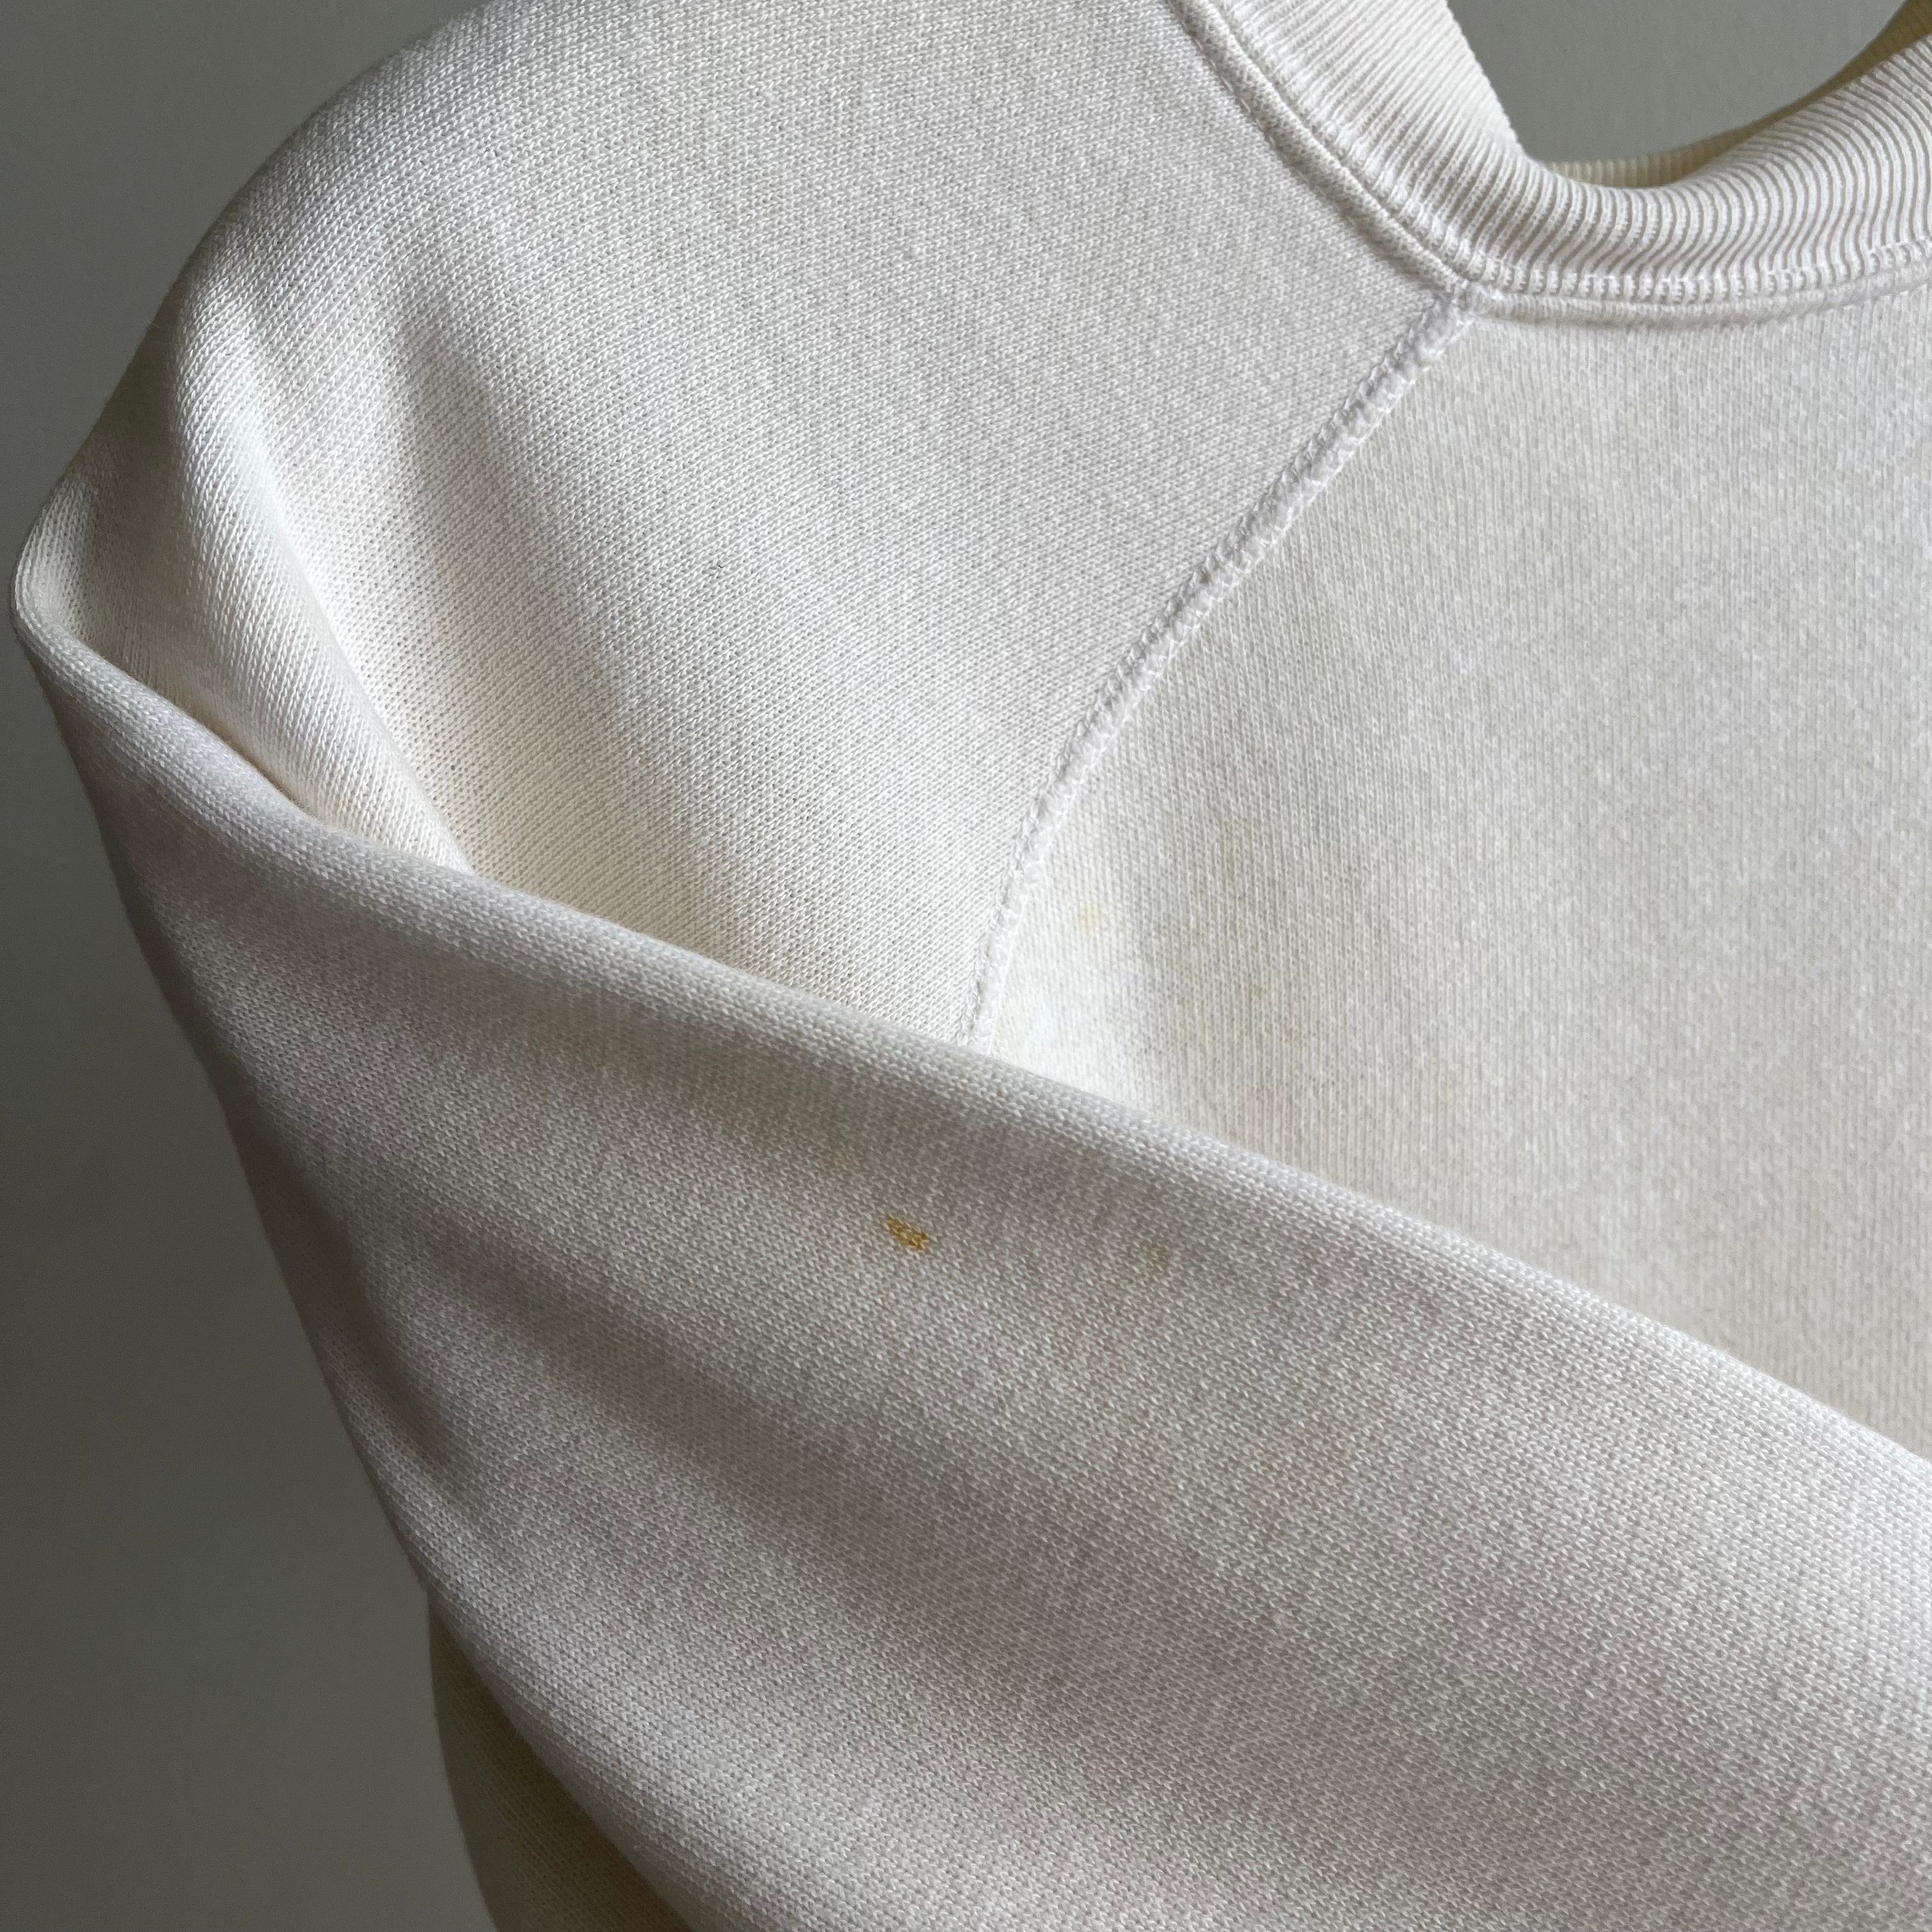 1980s Blank White Age Stained Raglan Sweatshirt